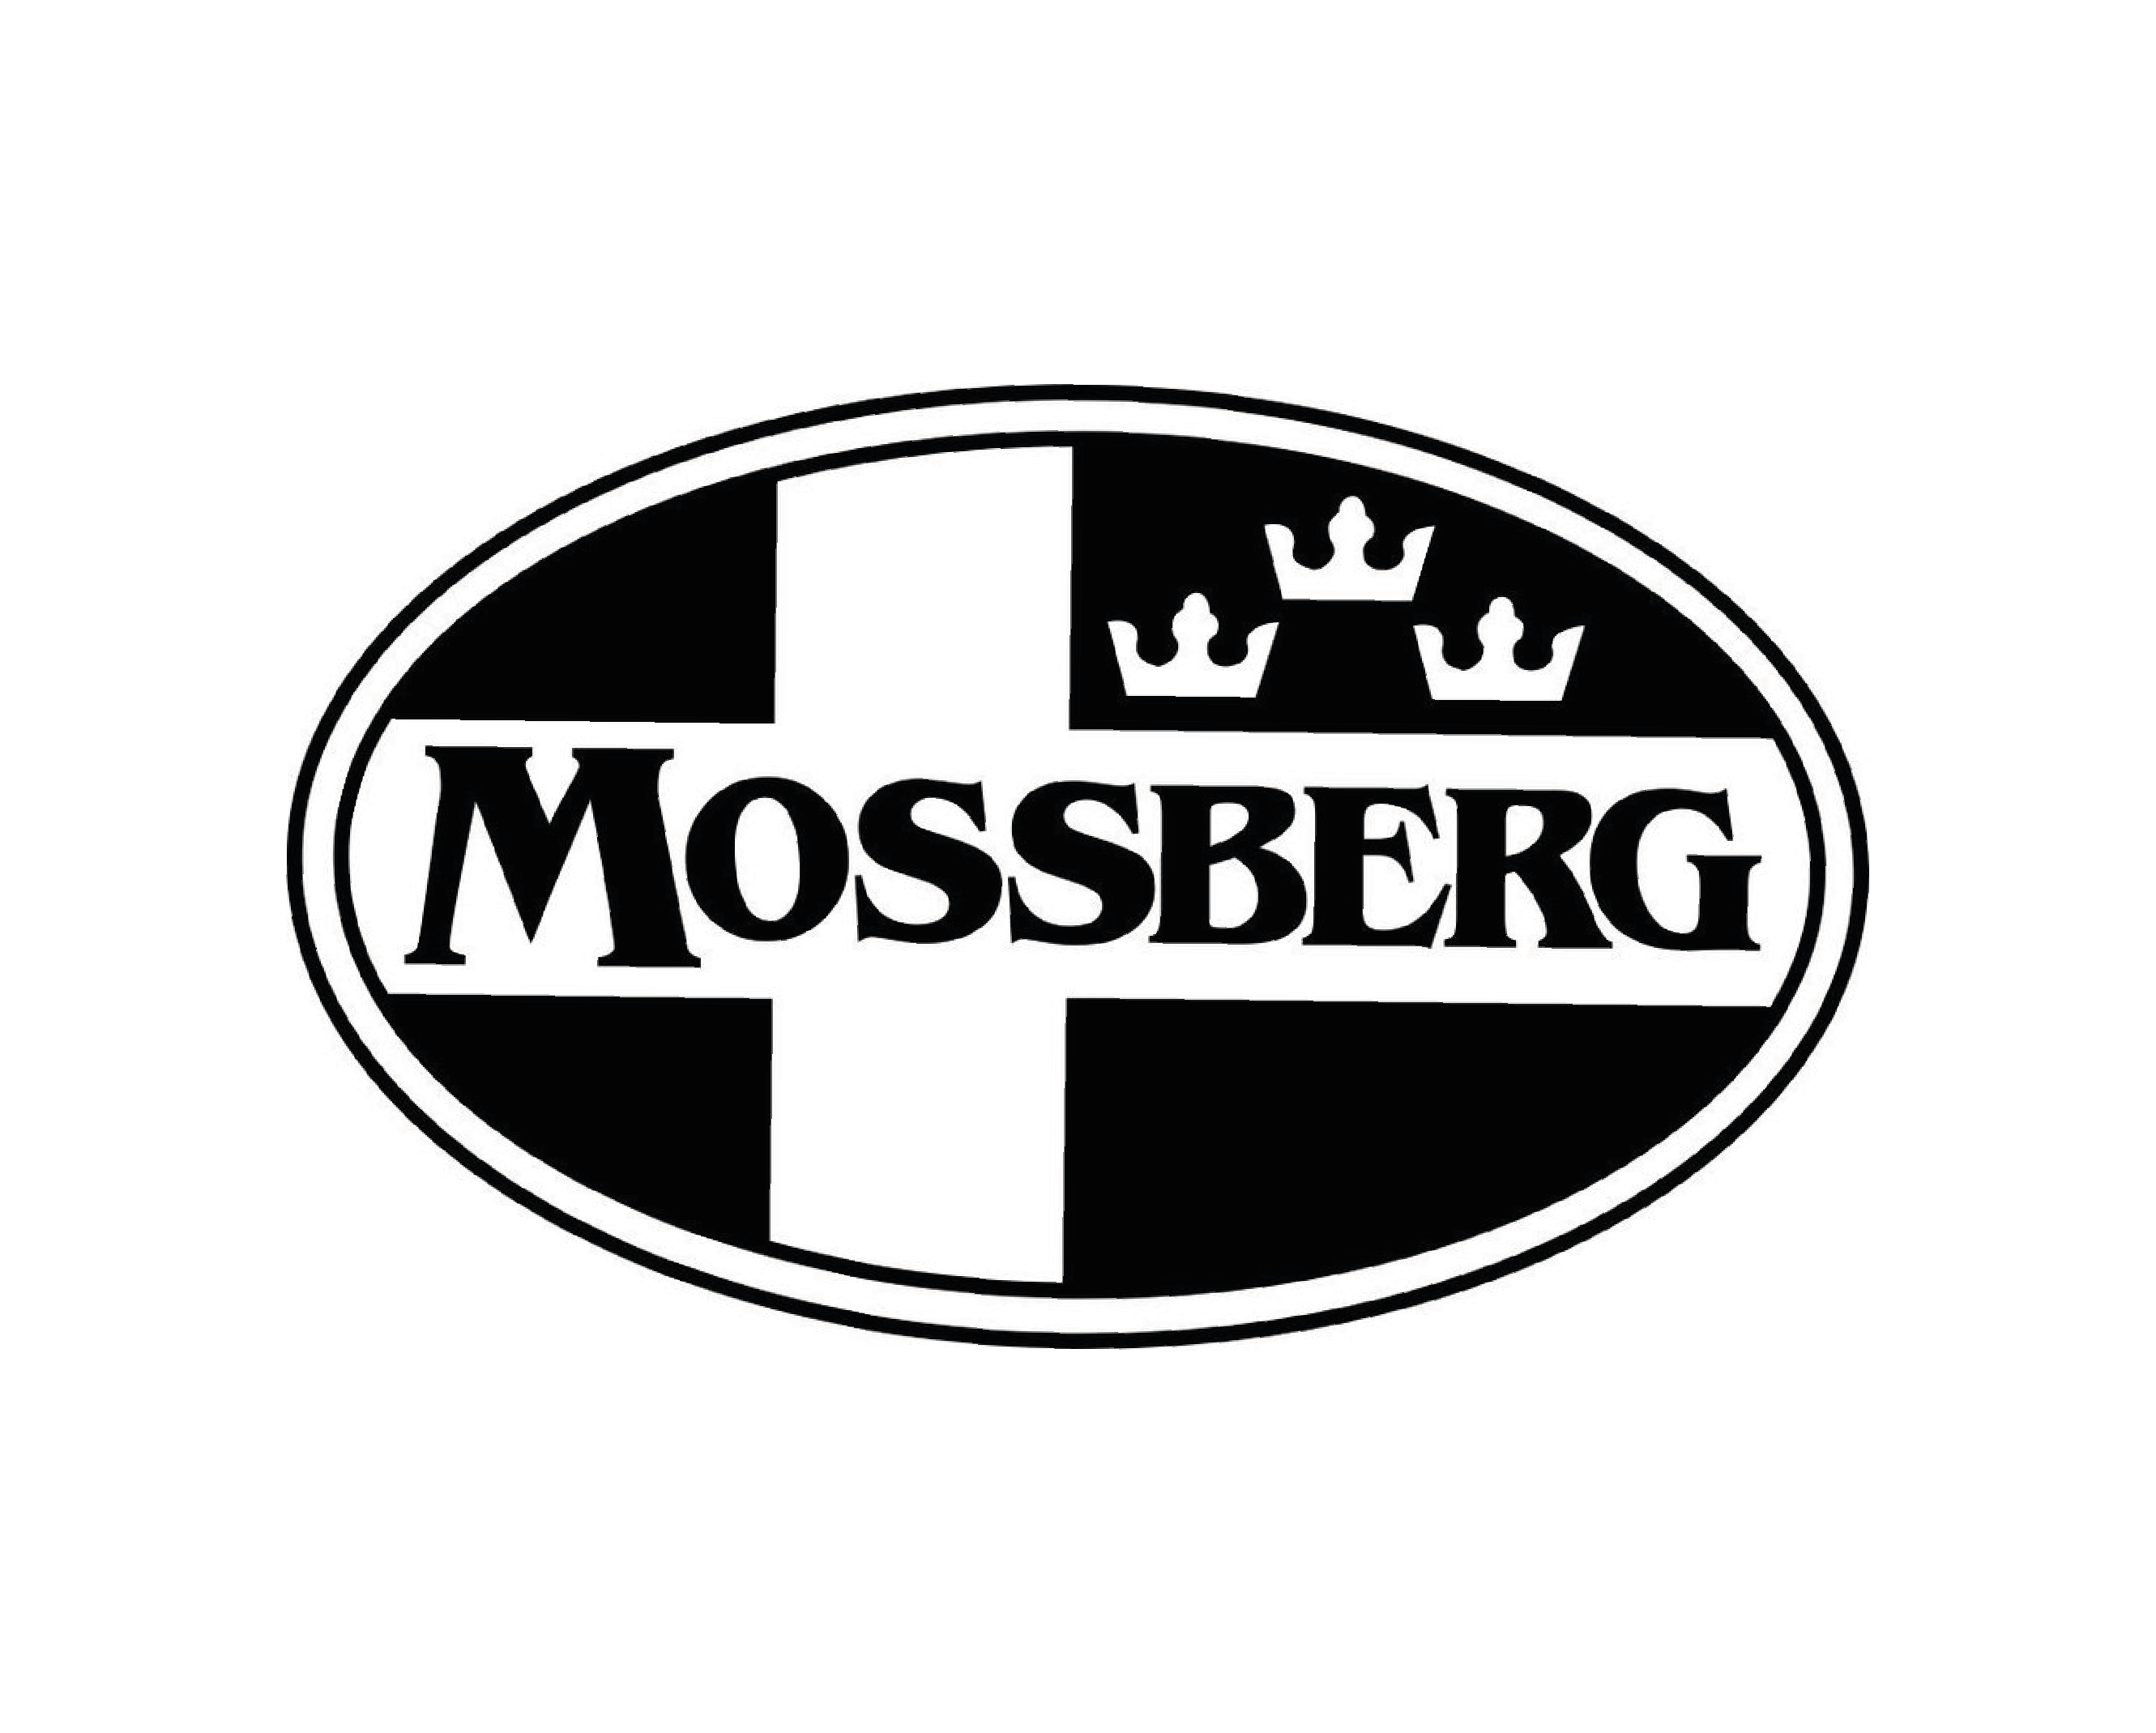 //centre-tir.ch/wp-content/uploads/2017/10/logo-mossberg.png